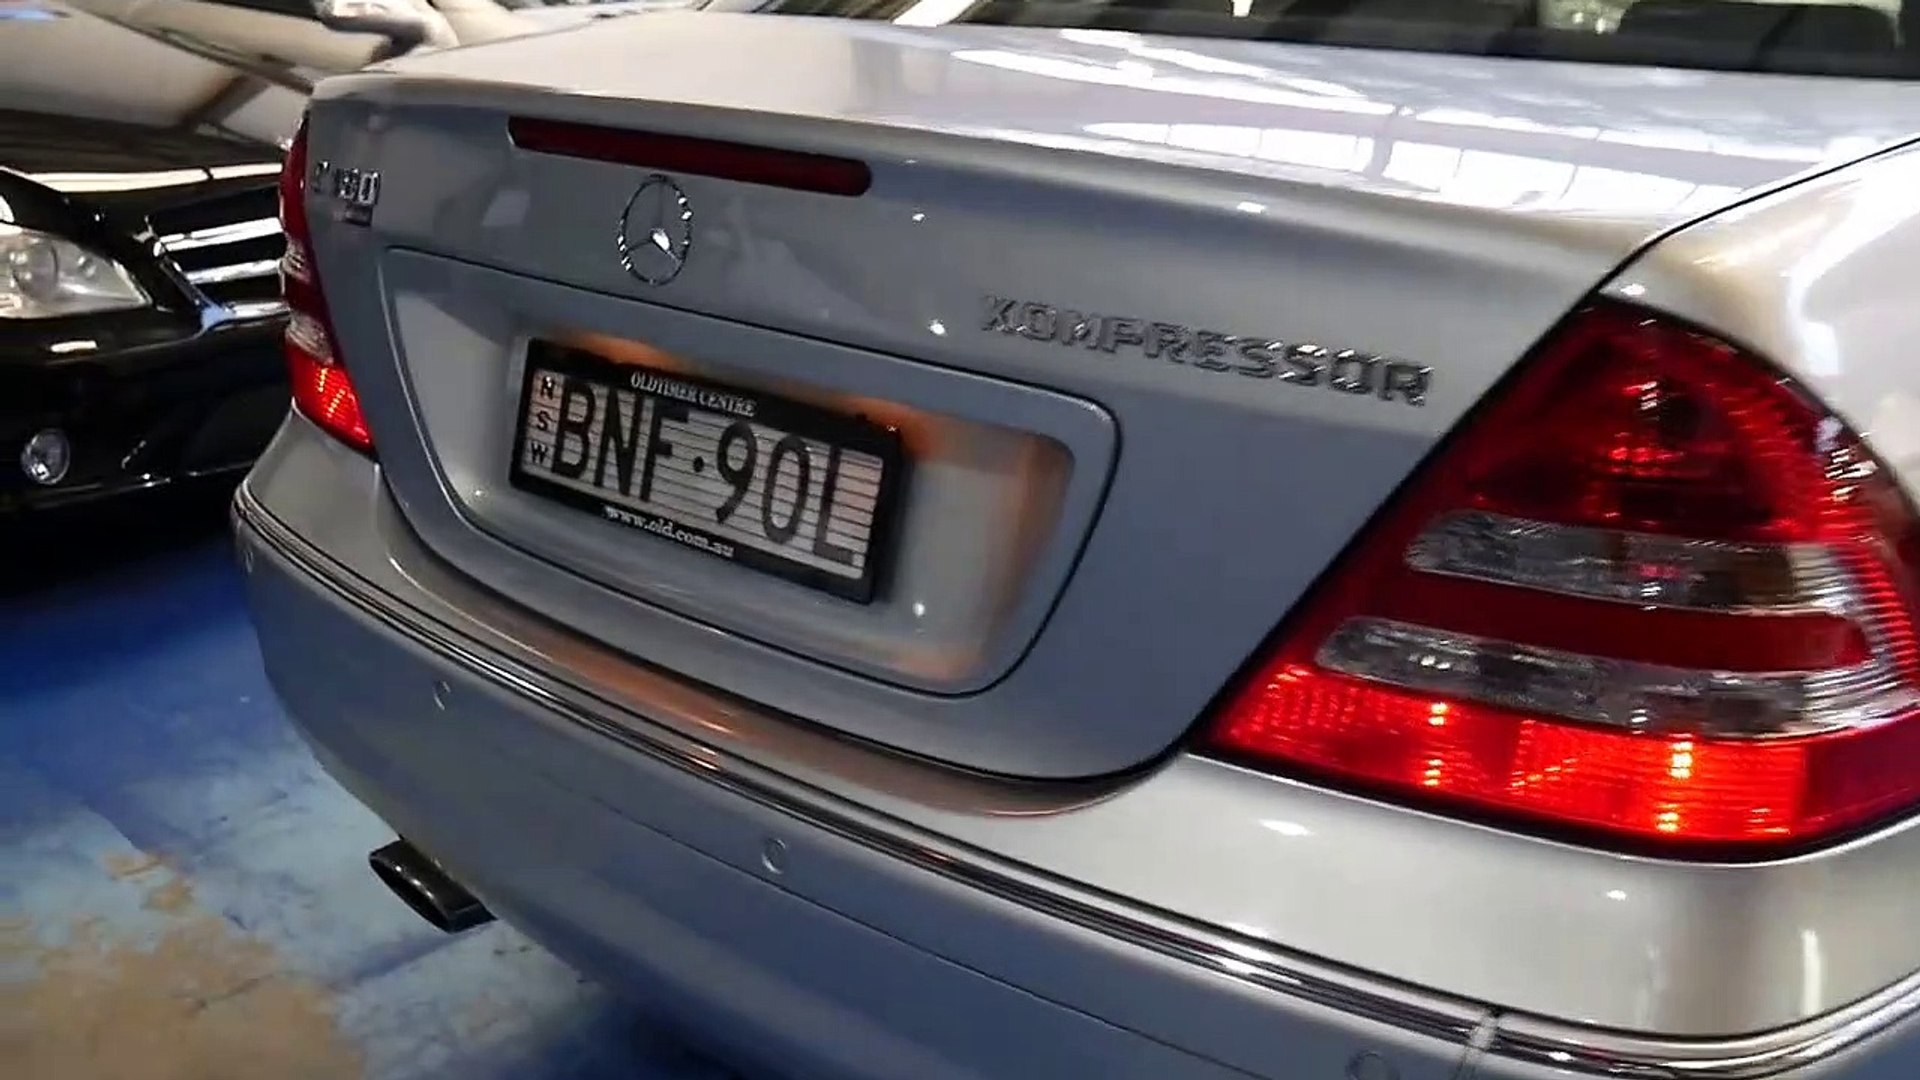 2010 Mercedes B200 Turbo - video Dailymotion